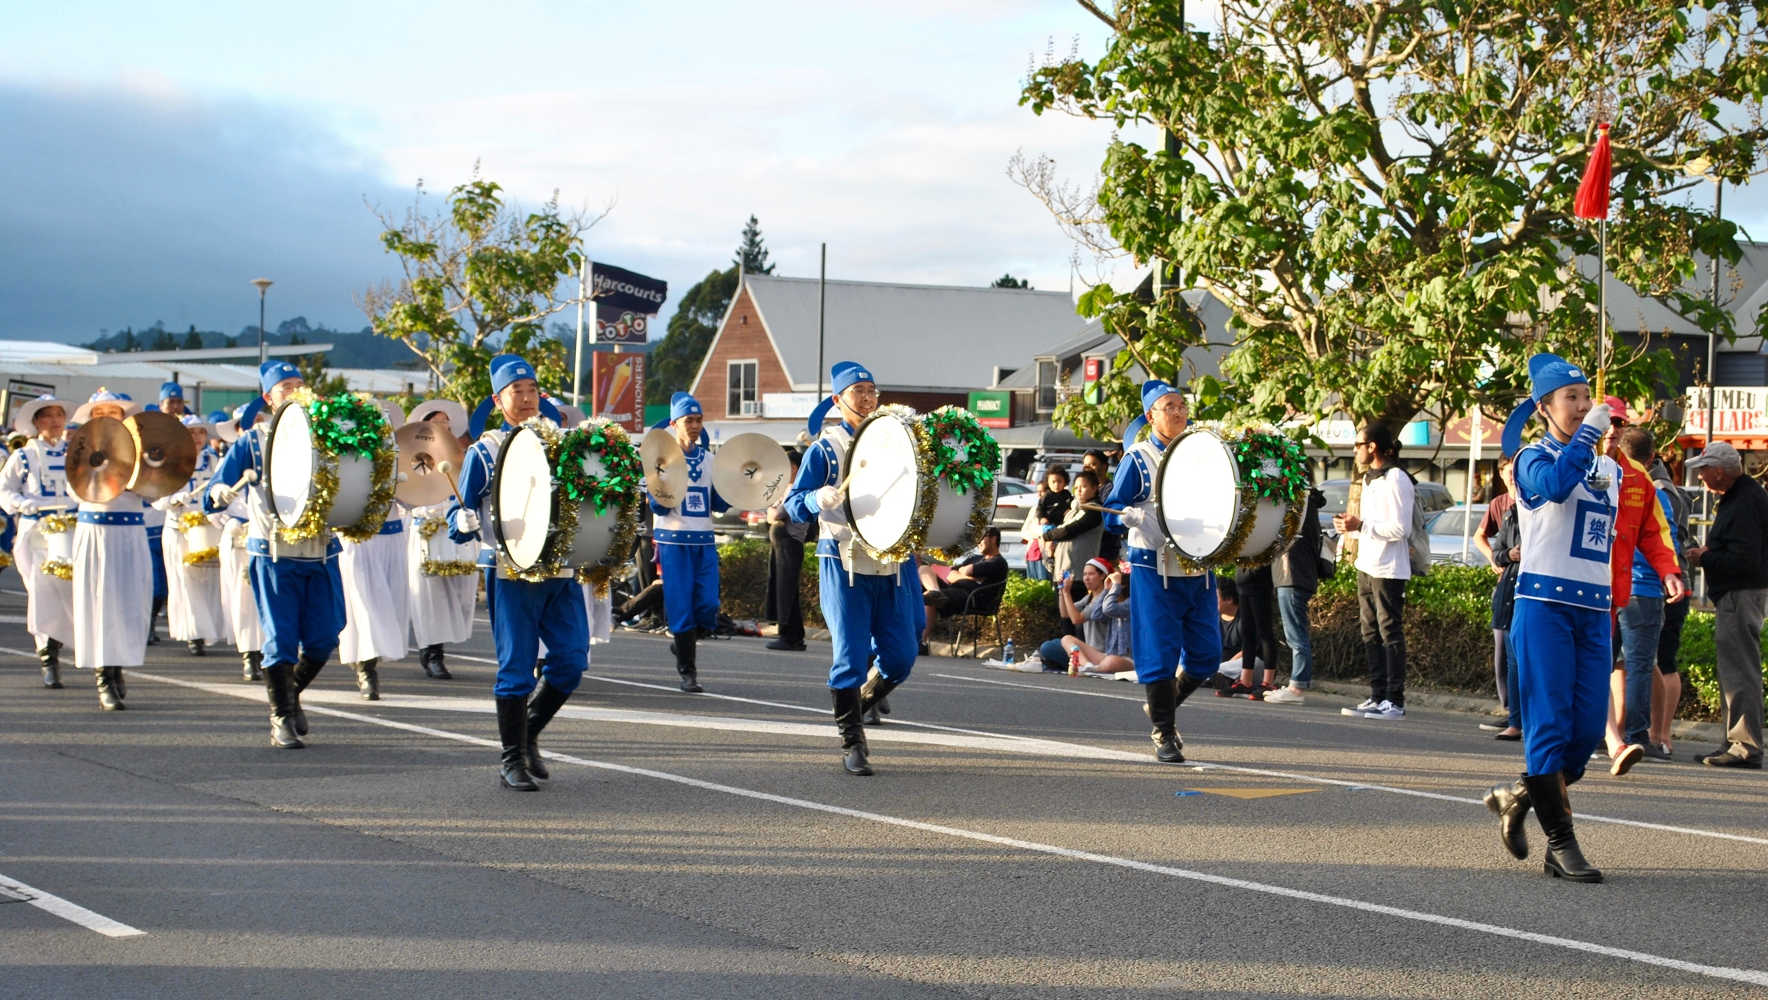 Hari Krishna band marching during a Christmas street parade in Kumeu, Auckland